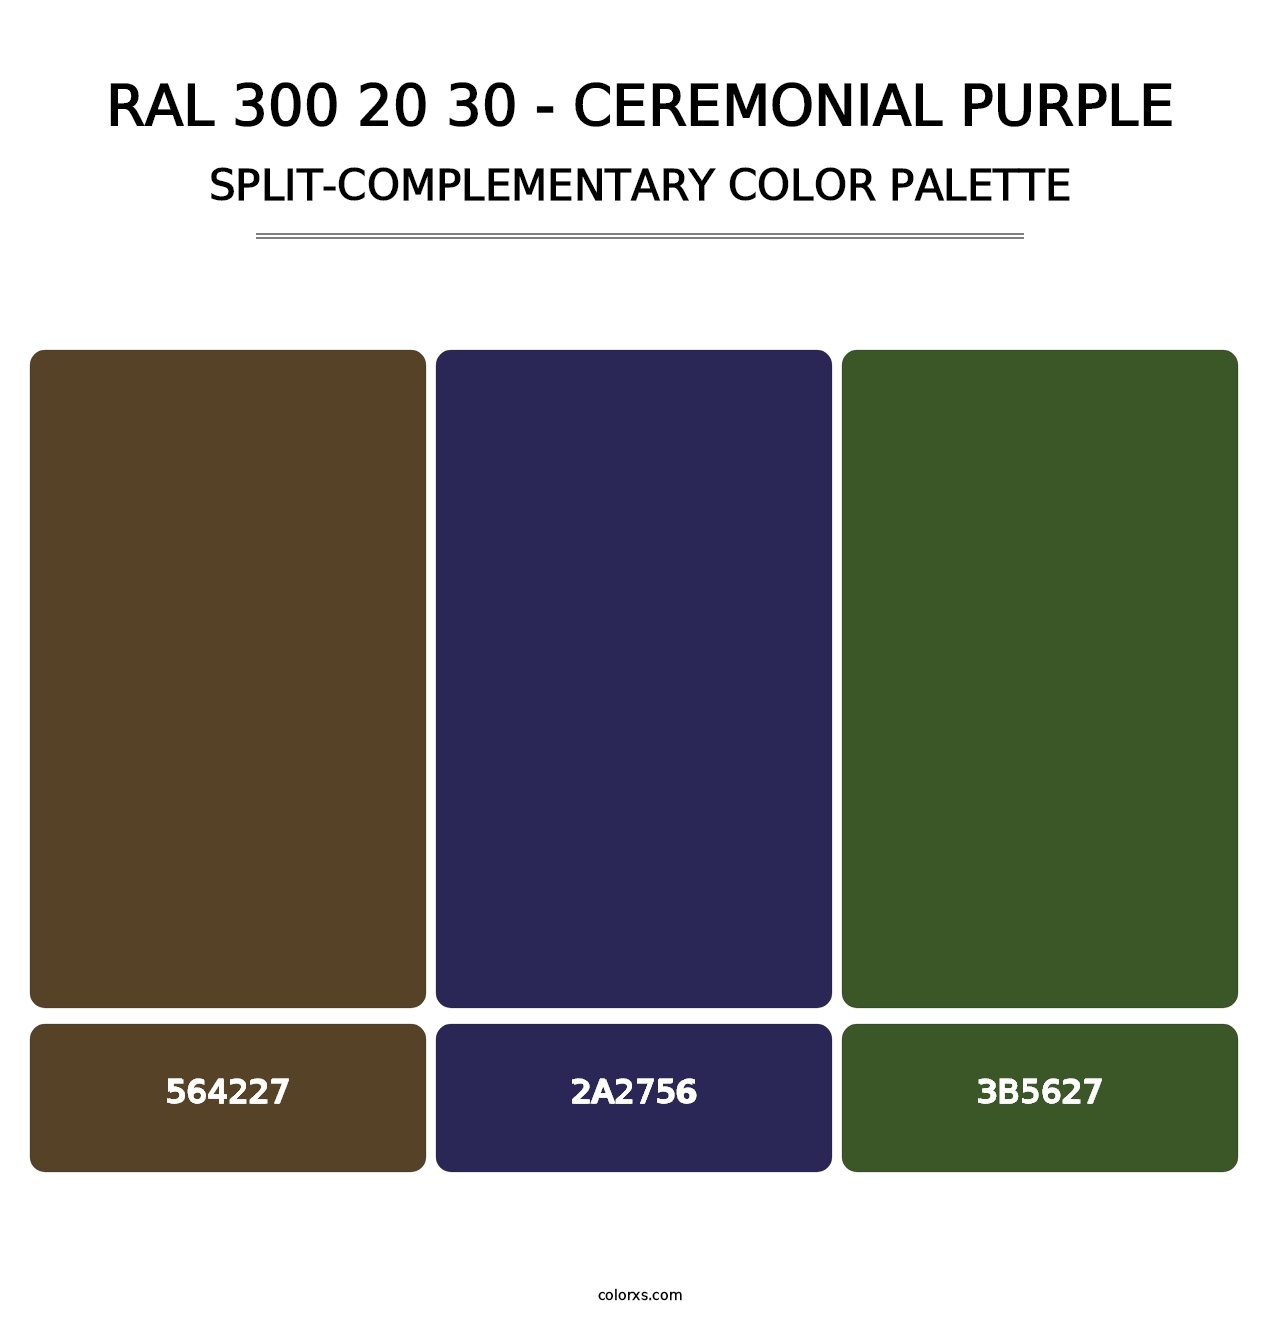 RAL 300 20 30 - Ceremonial Purple - Split-Complementary Color Palette